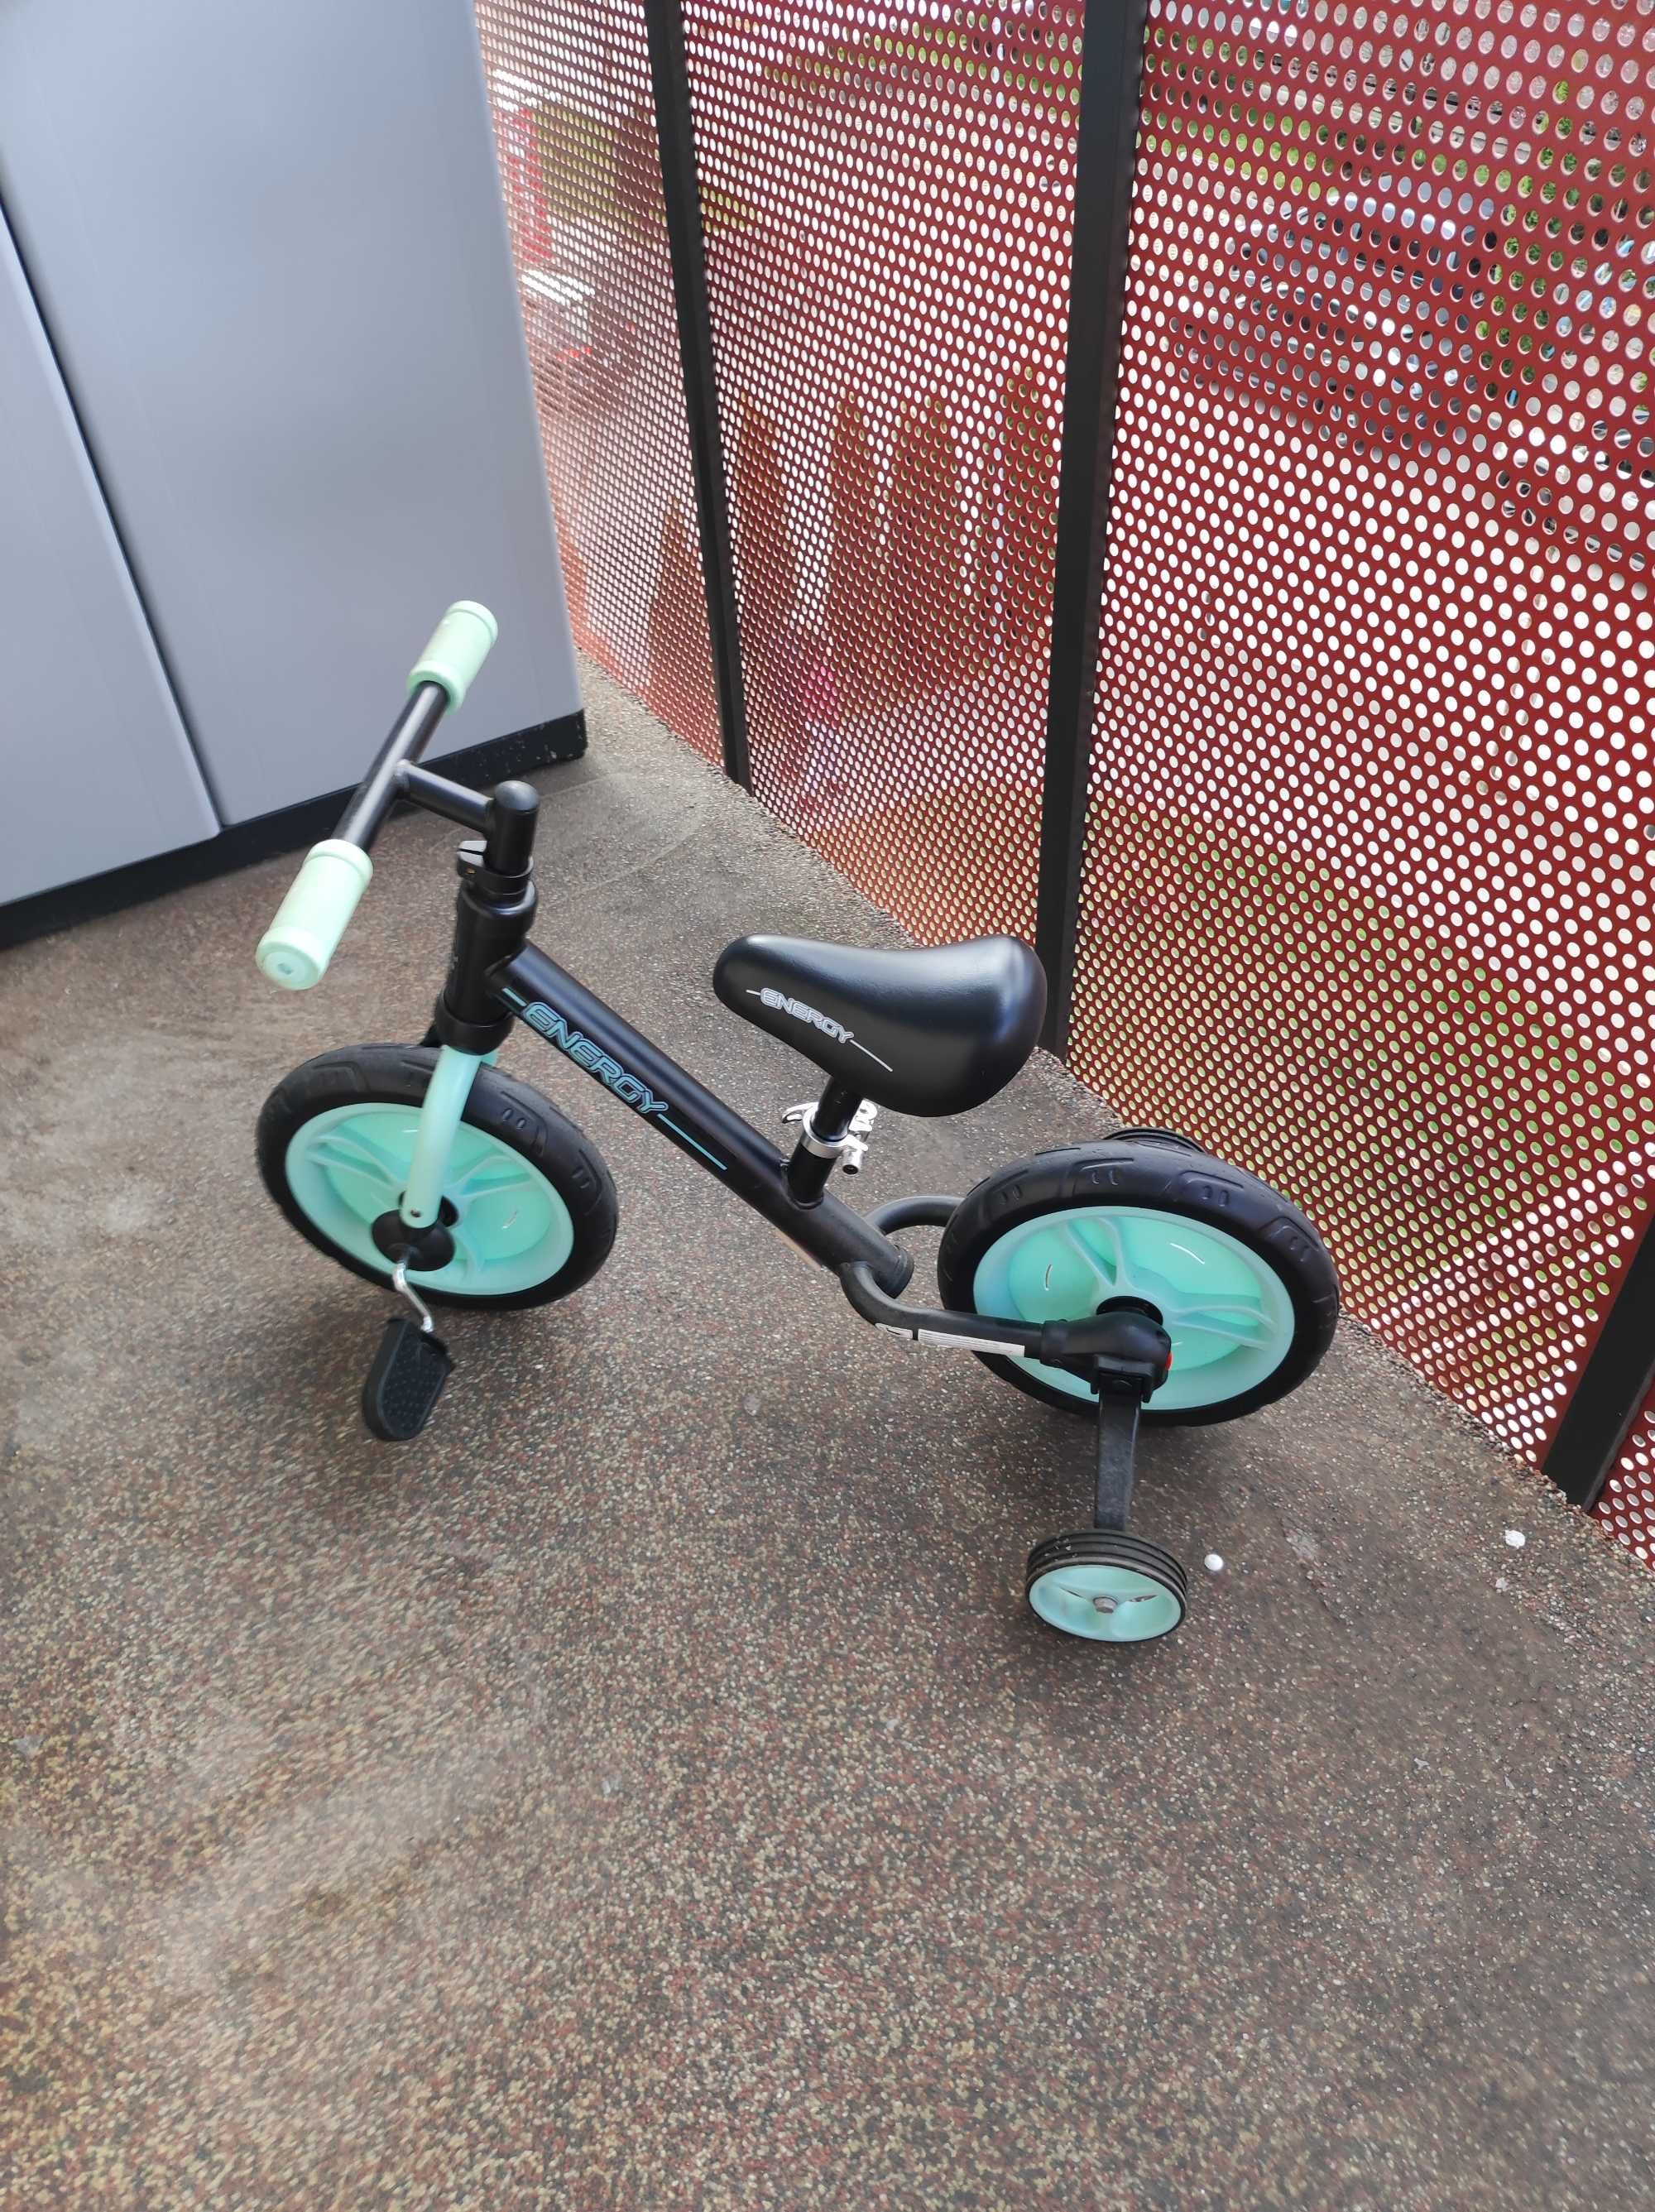 BIcicleta copii-200 LEI,Tobogan copii-500 LEI(Negociabil)